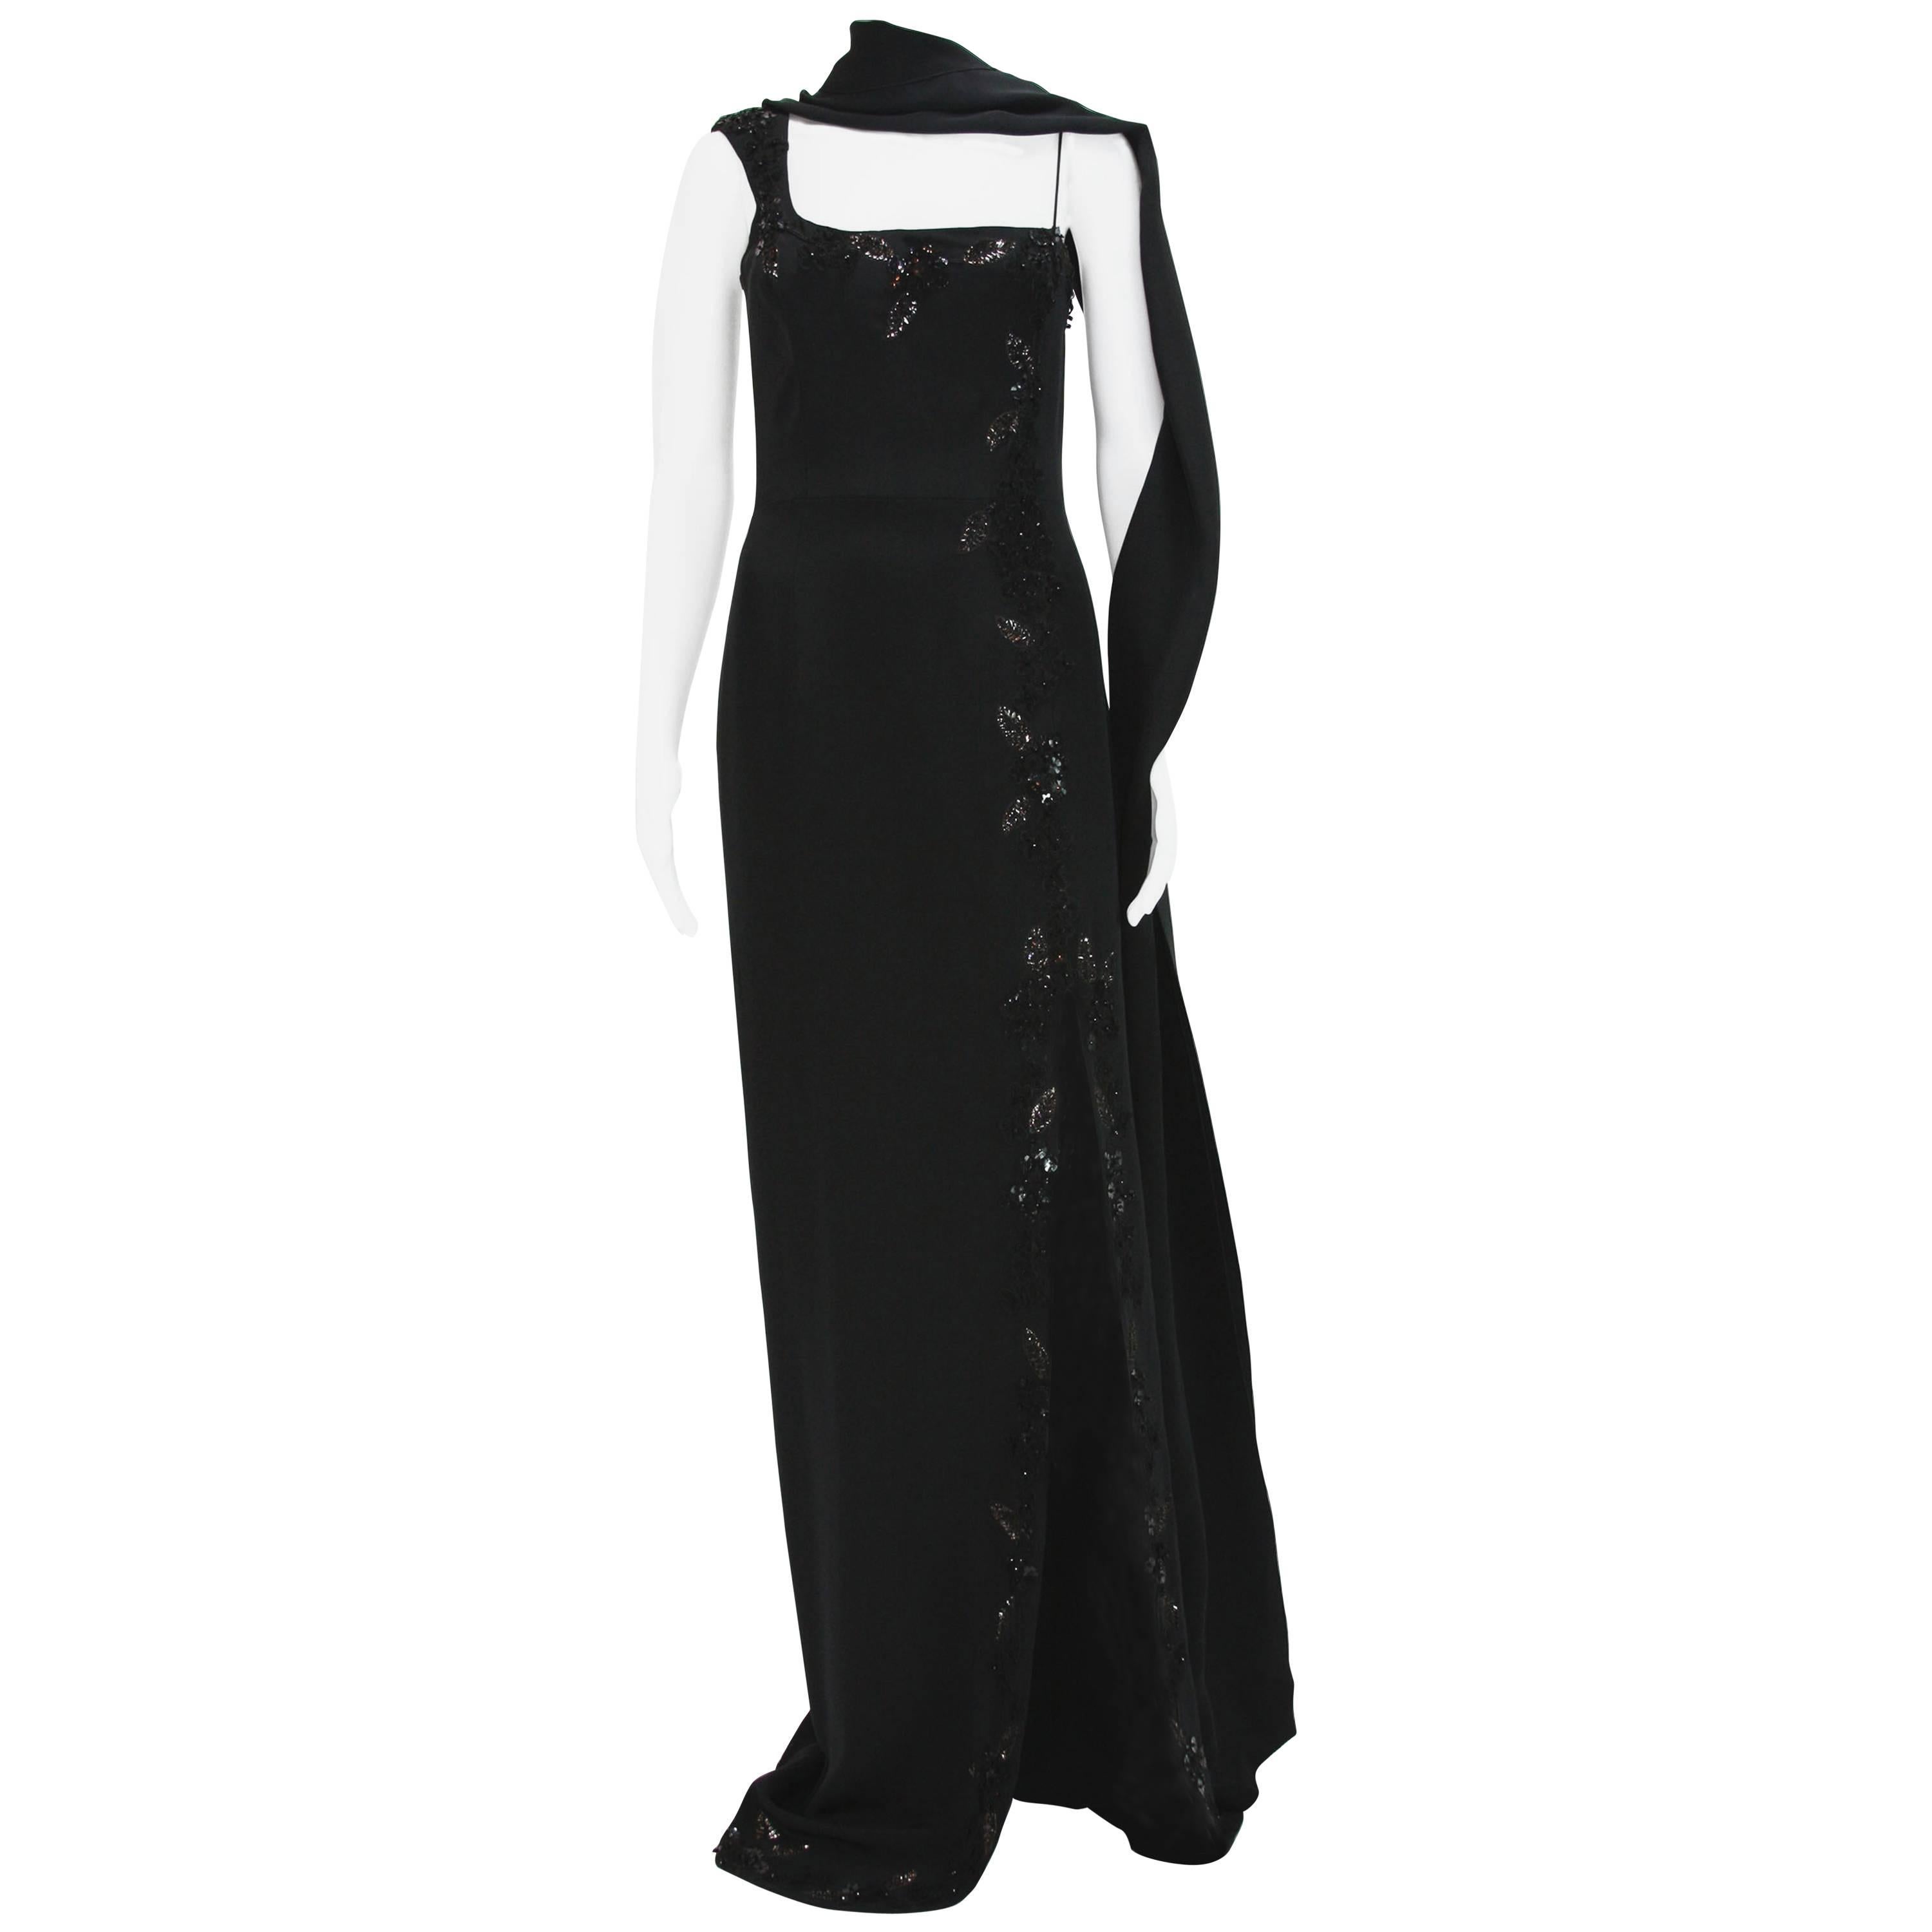 New $7500 L'WREN SCOTT S/S 2010 Represent Her *MADAME DU BARRY* Black Dress Gown